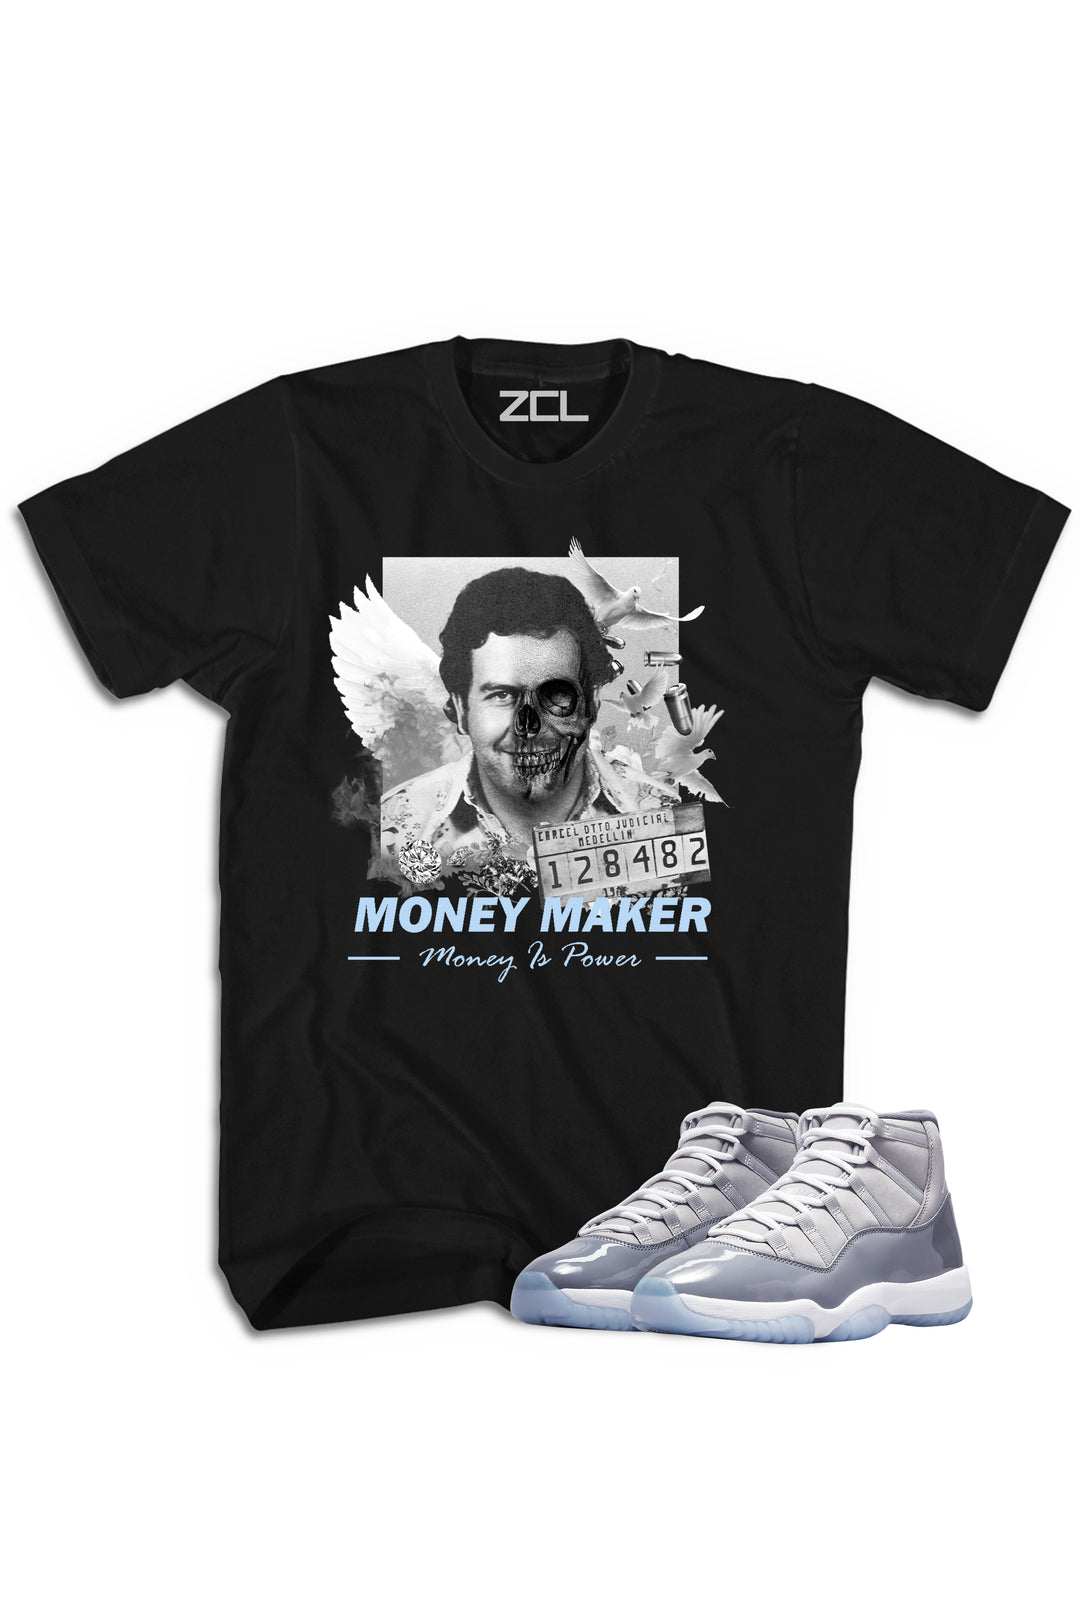 Air Jordan 11 "Money Maker" Tee Cool Grey - Zamage